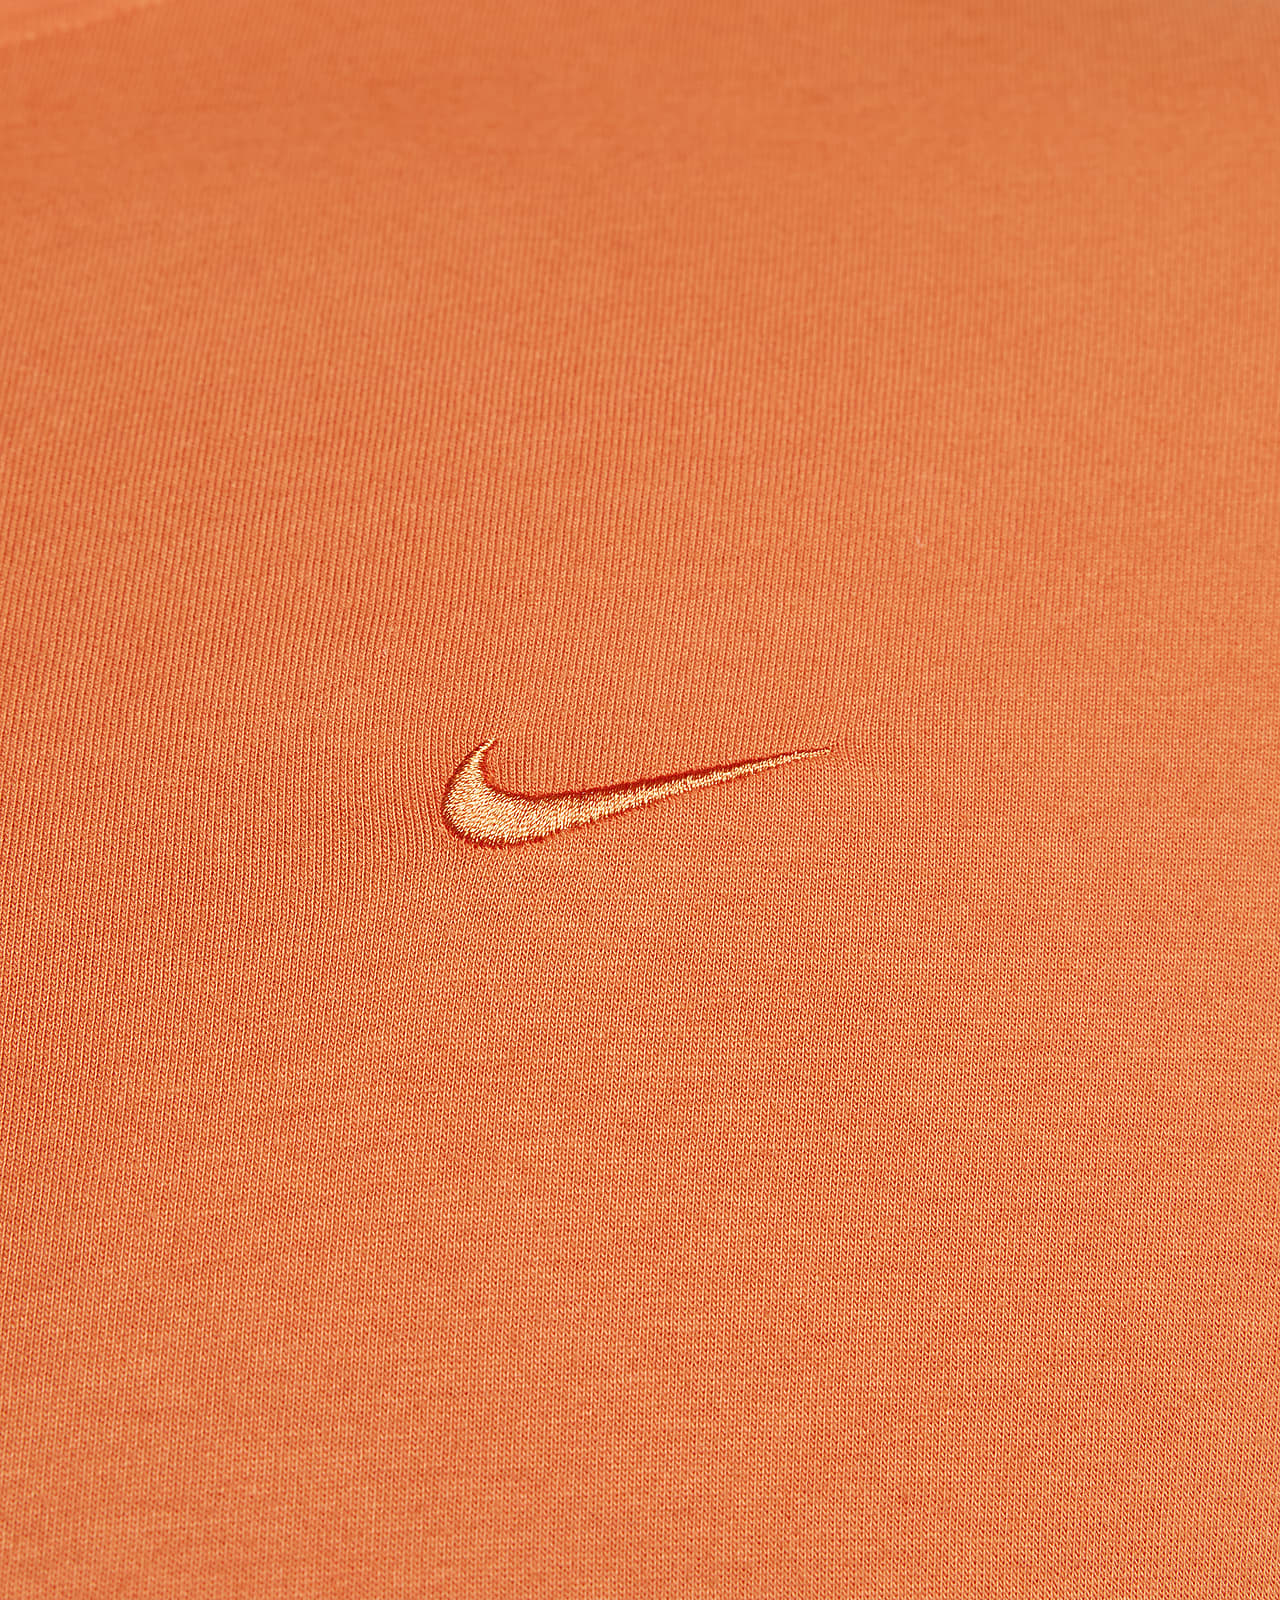 Nike Primary Men's Dri-FIT Short-Sleeve Versatile Top